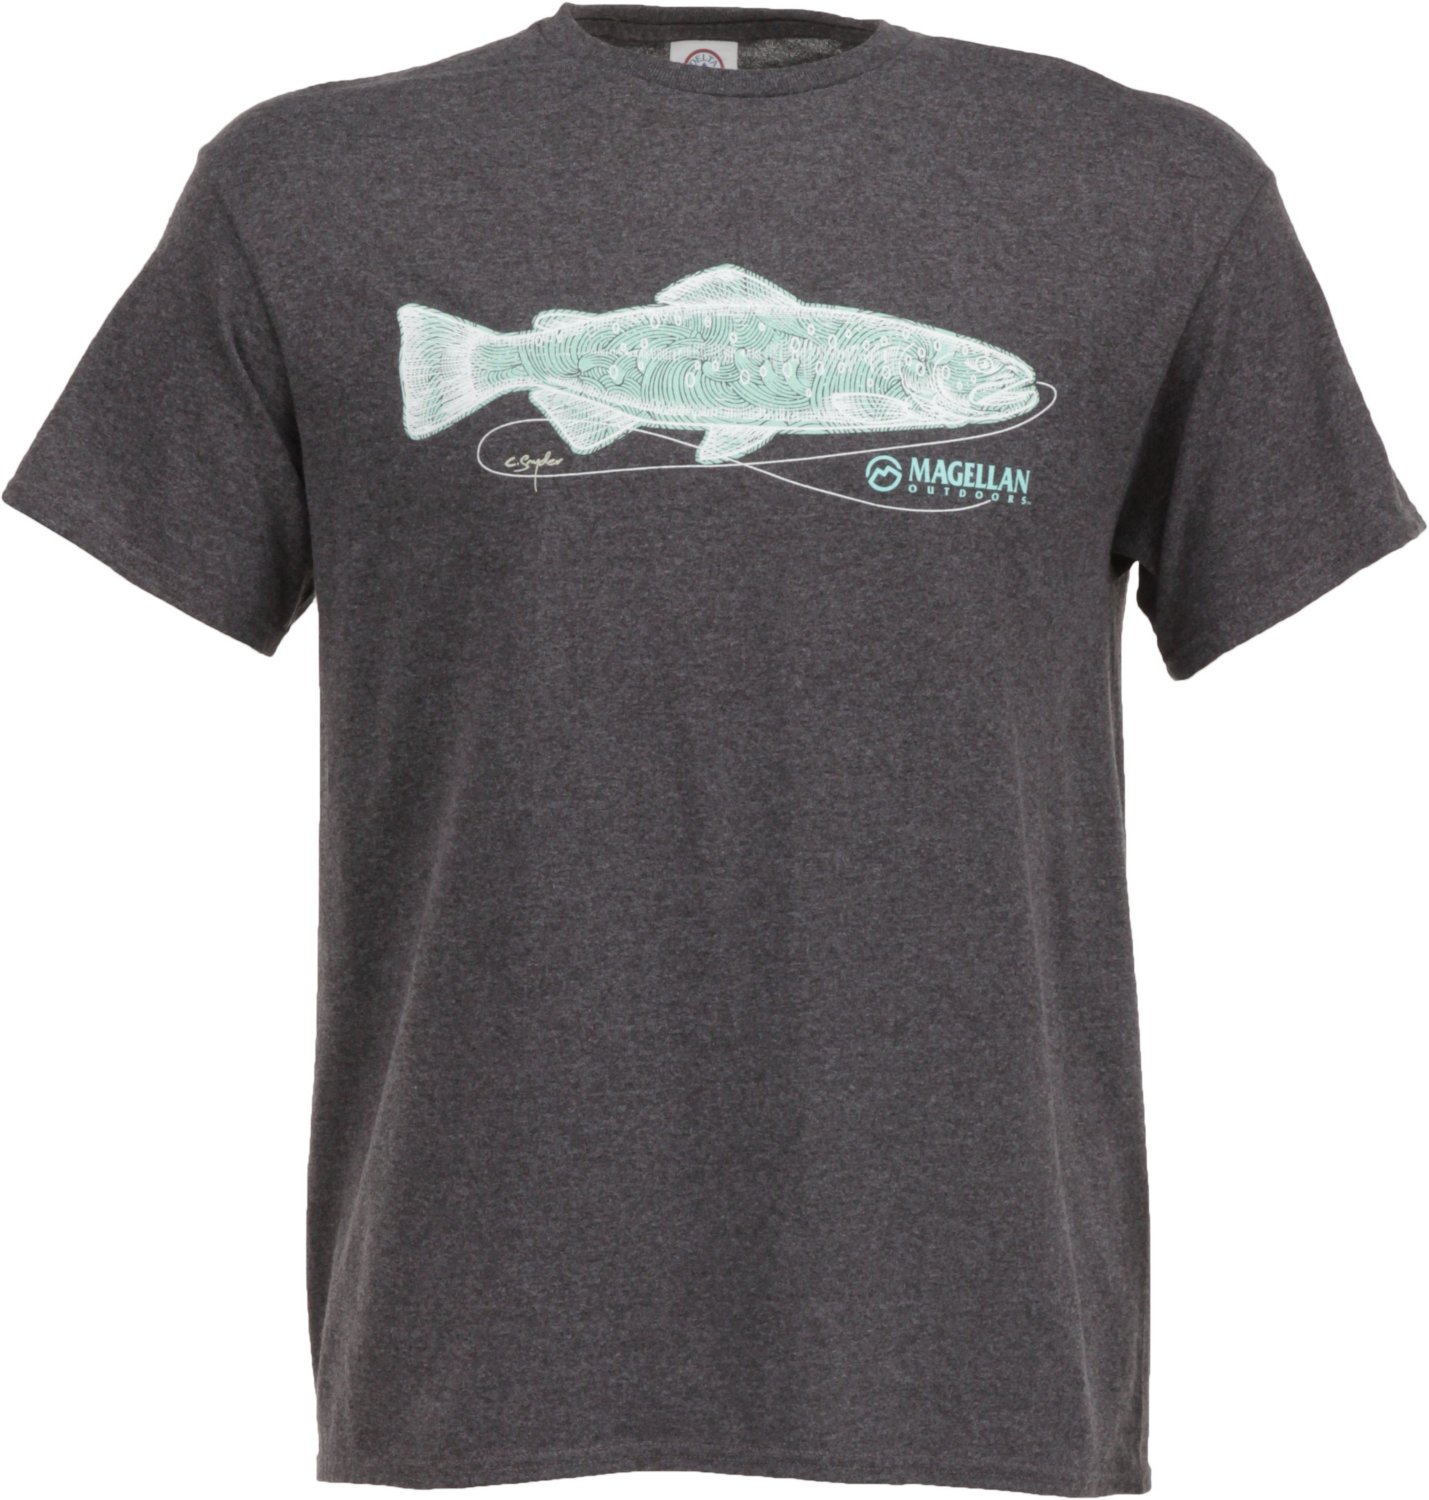 Fishing Graphic Tees - Fishing Graphic T-Shirts | Academy